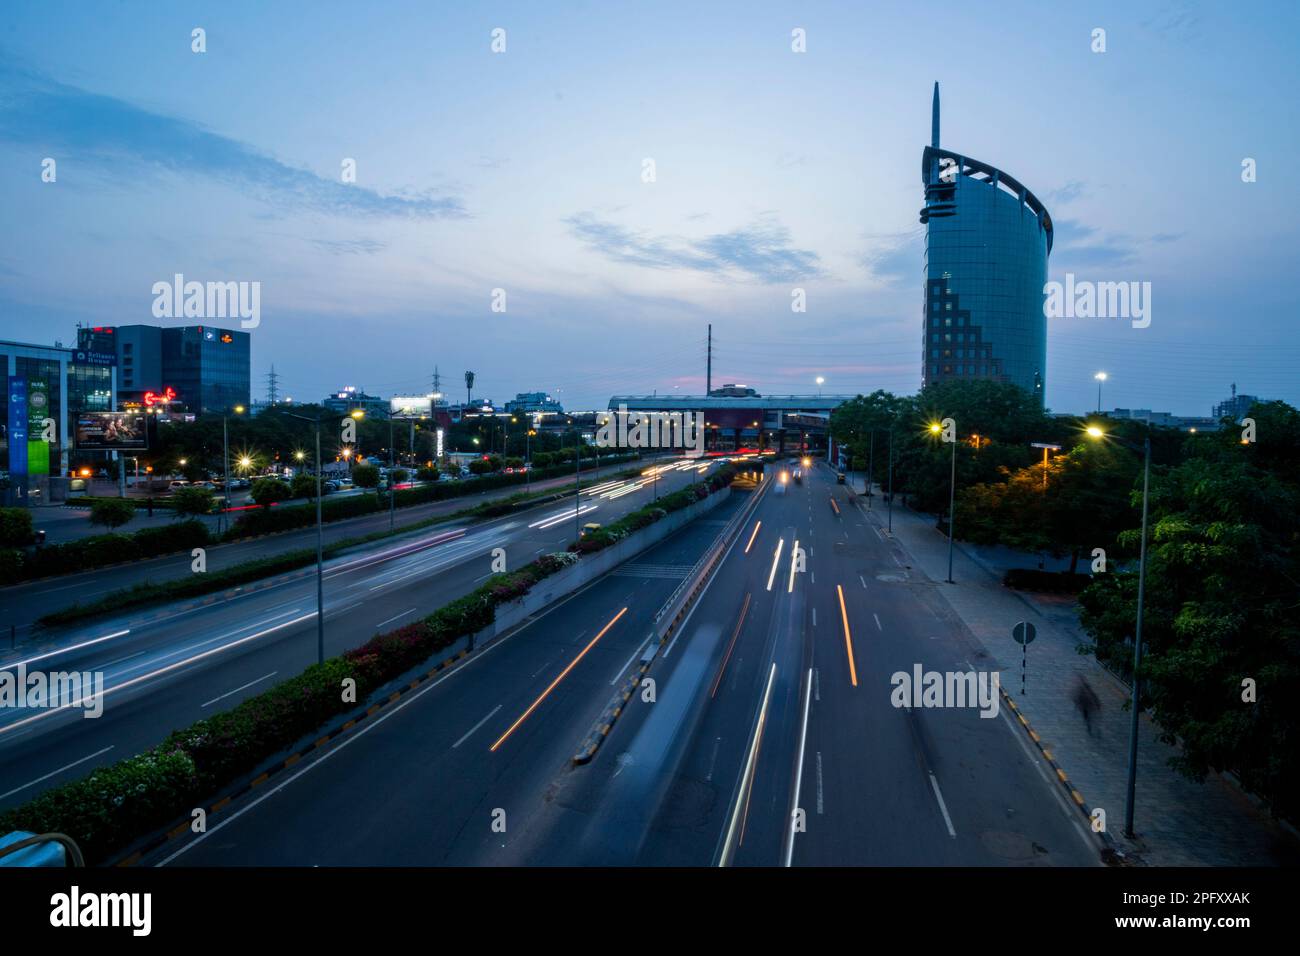 Cyber city in Gurgaon Stock Photo